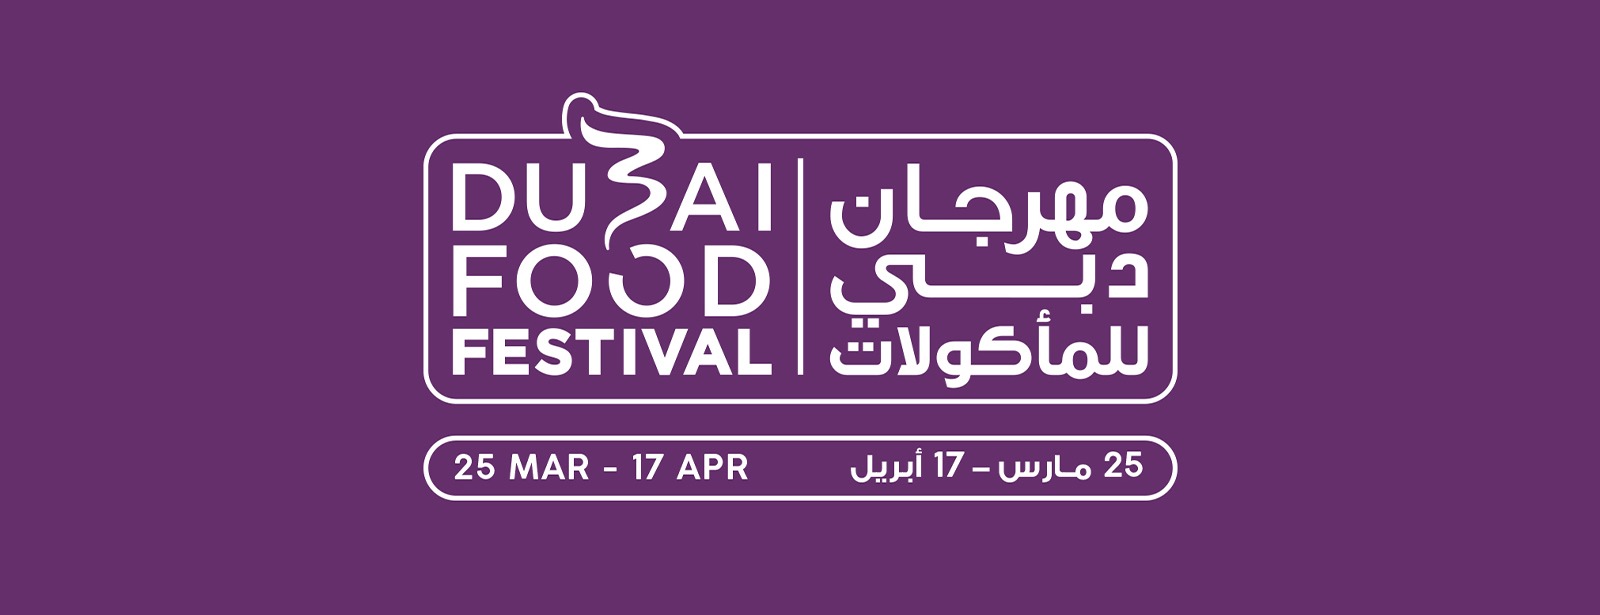 Dubai Food Festival 2021 - Coming Soon in UAE